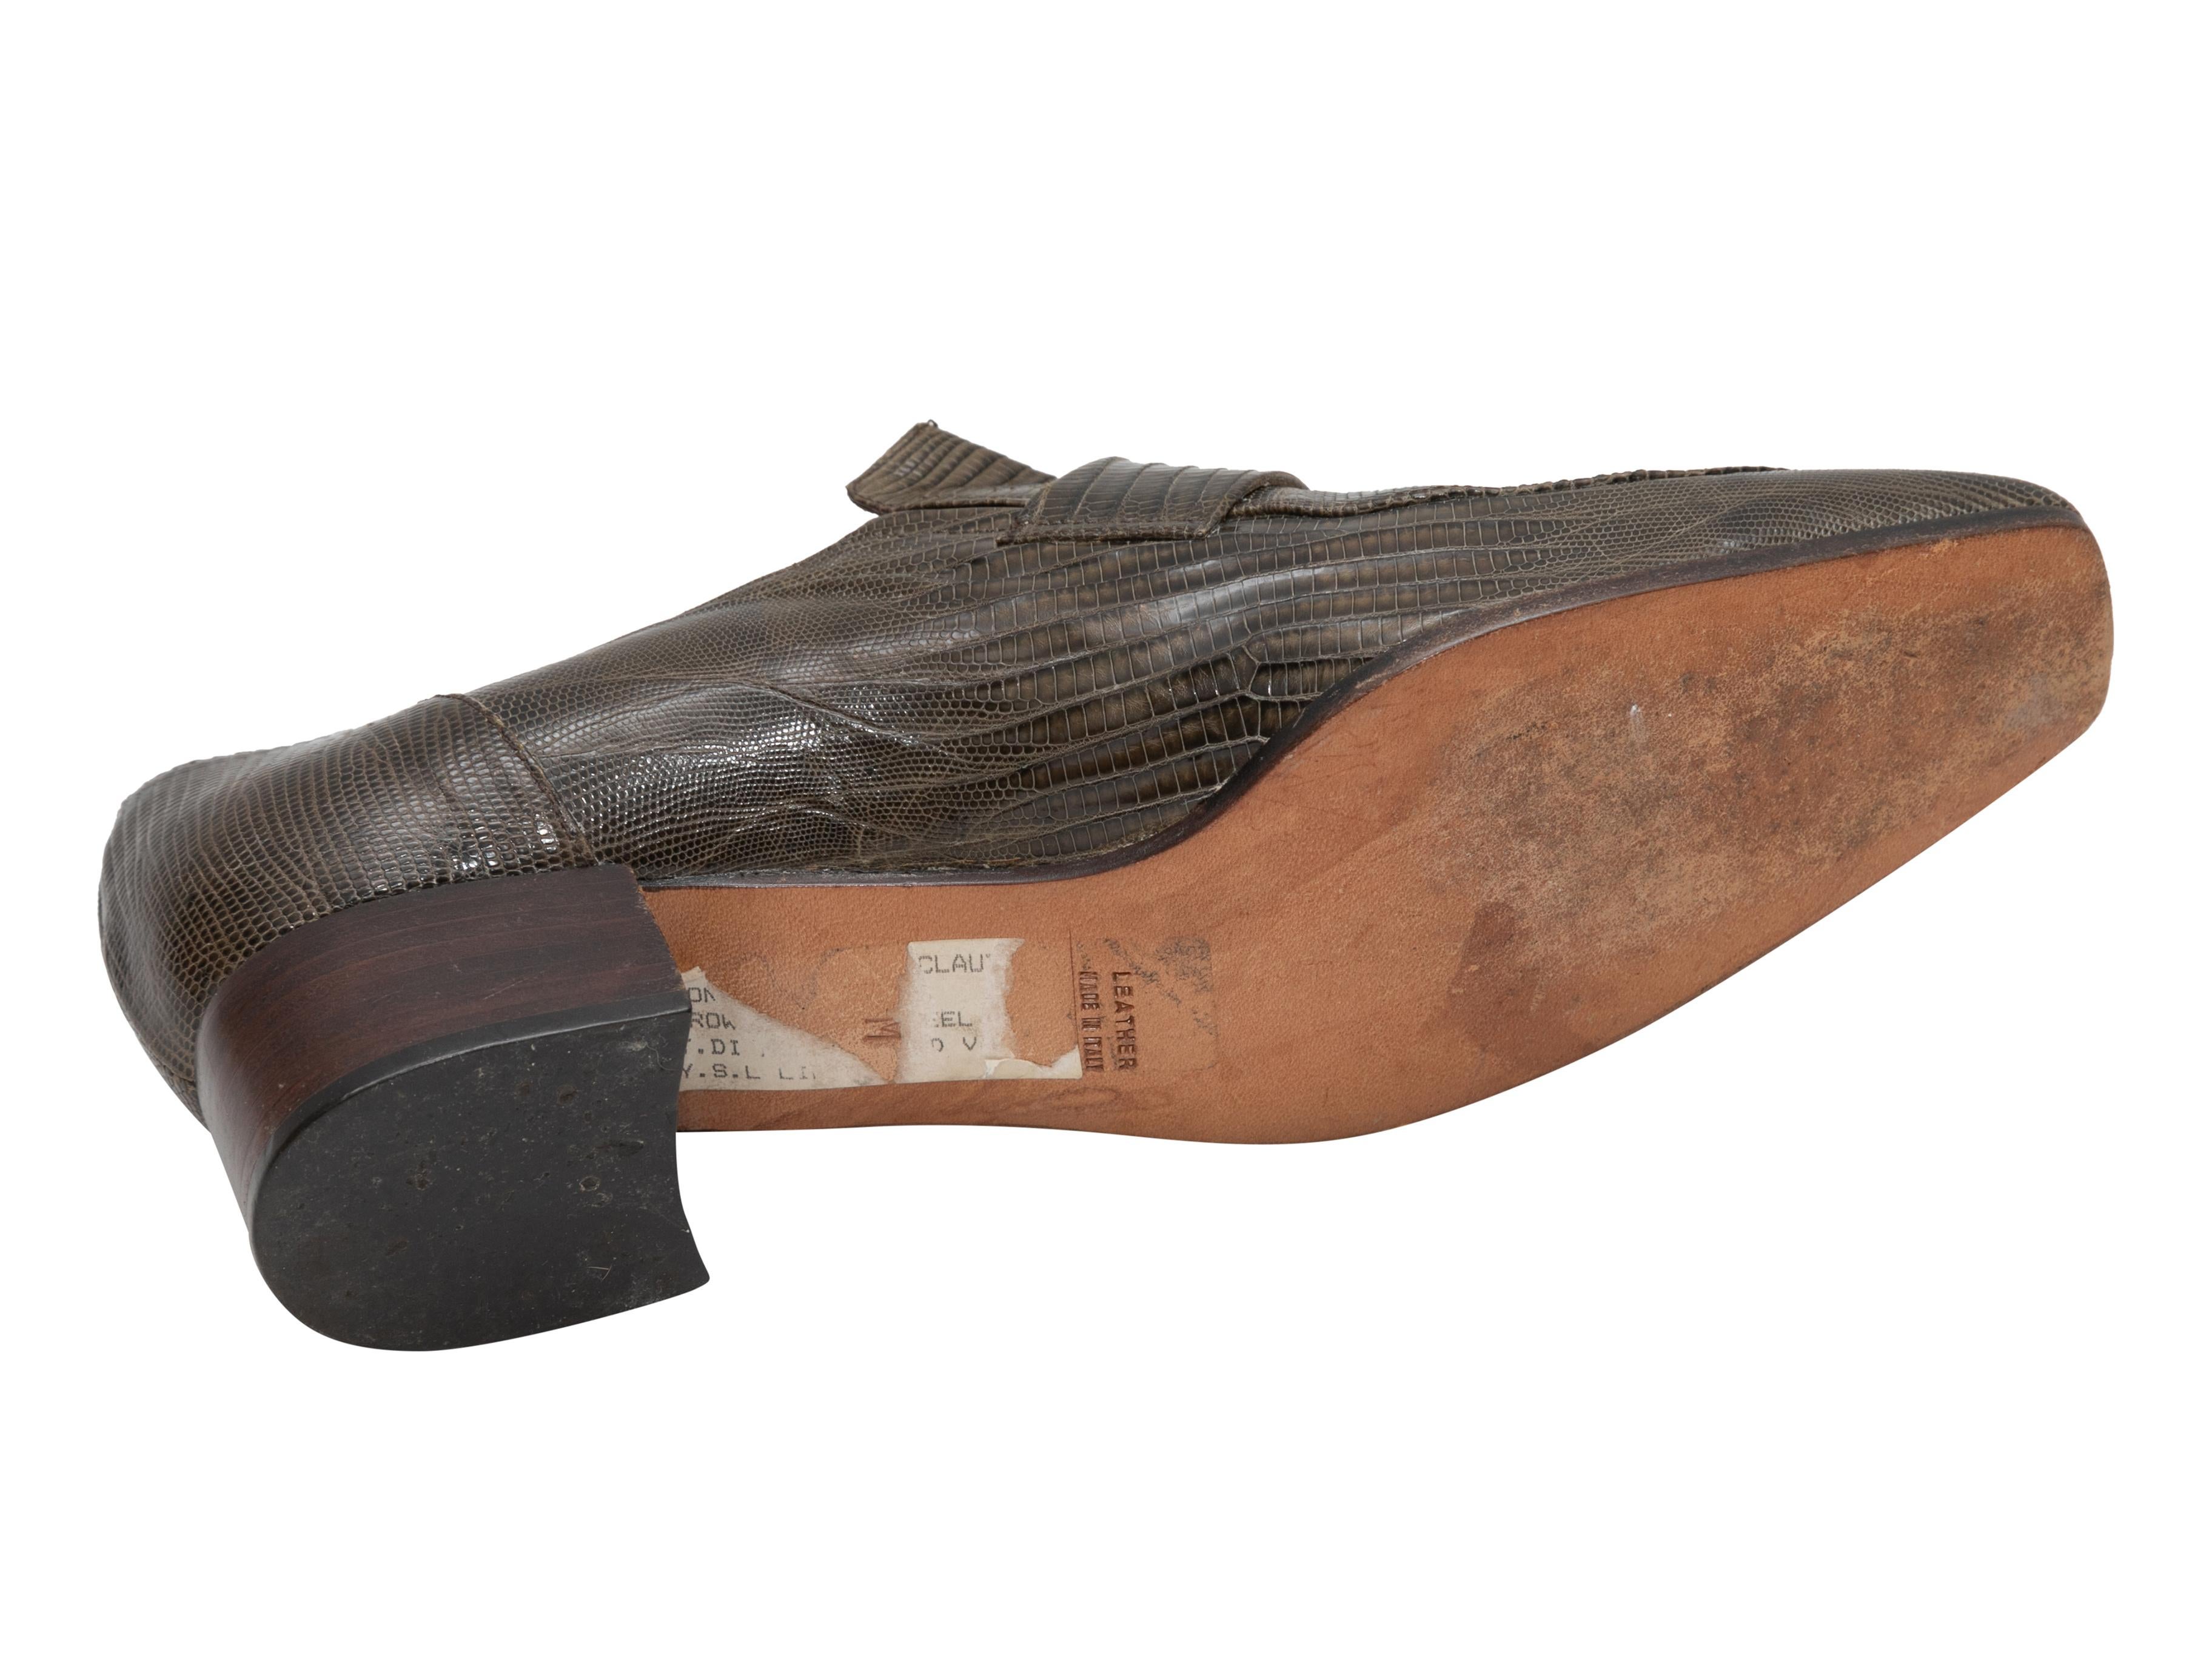 Vintage olive lizard skin loafers by Yves Saint Laurent. Stacked heels. 1.25